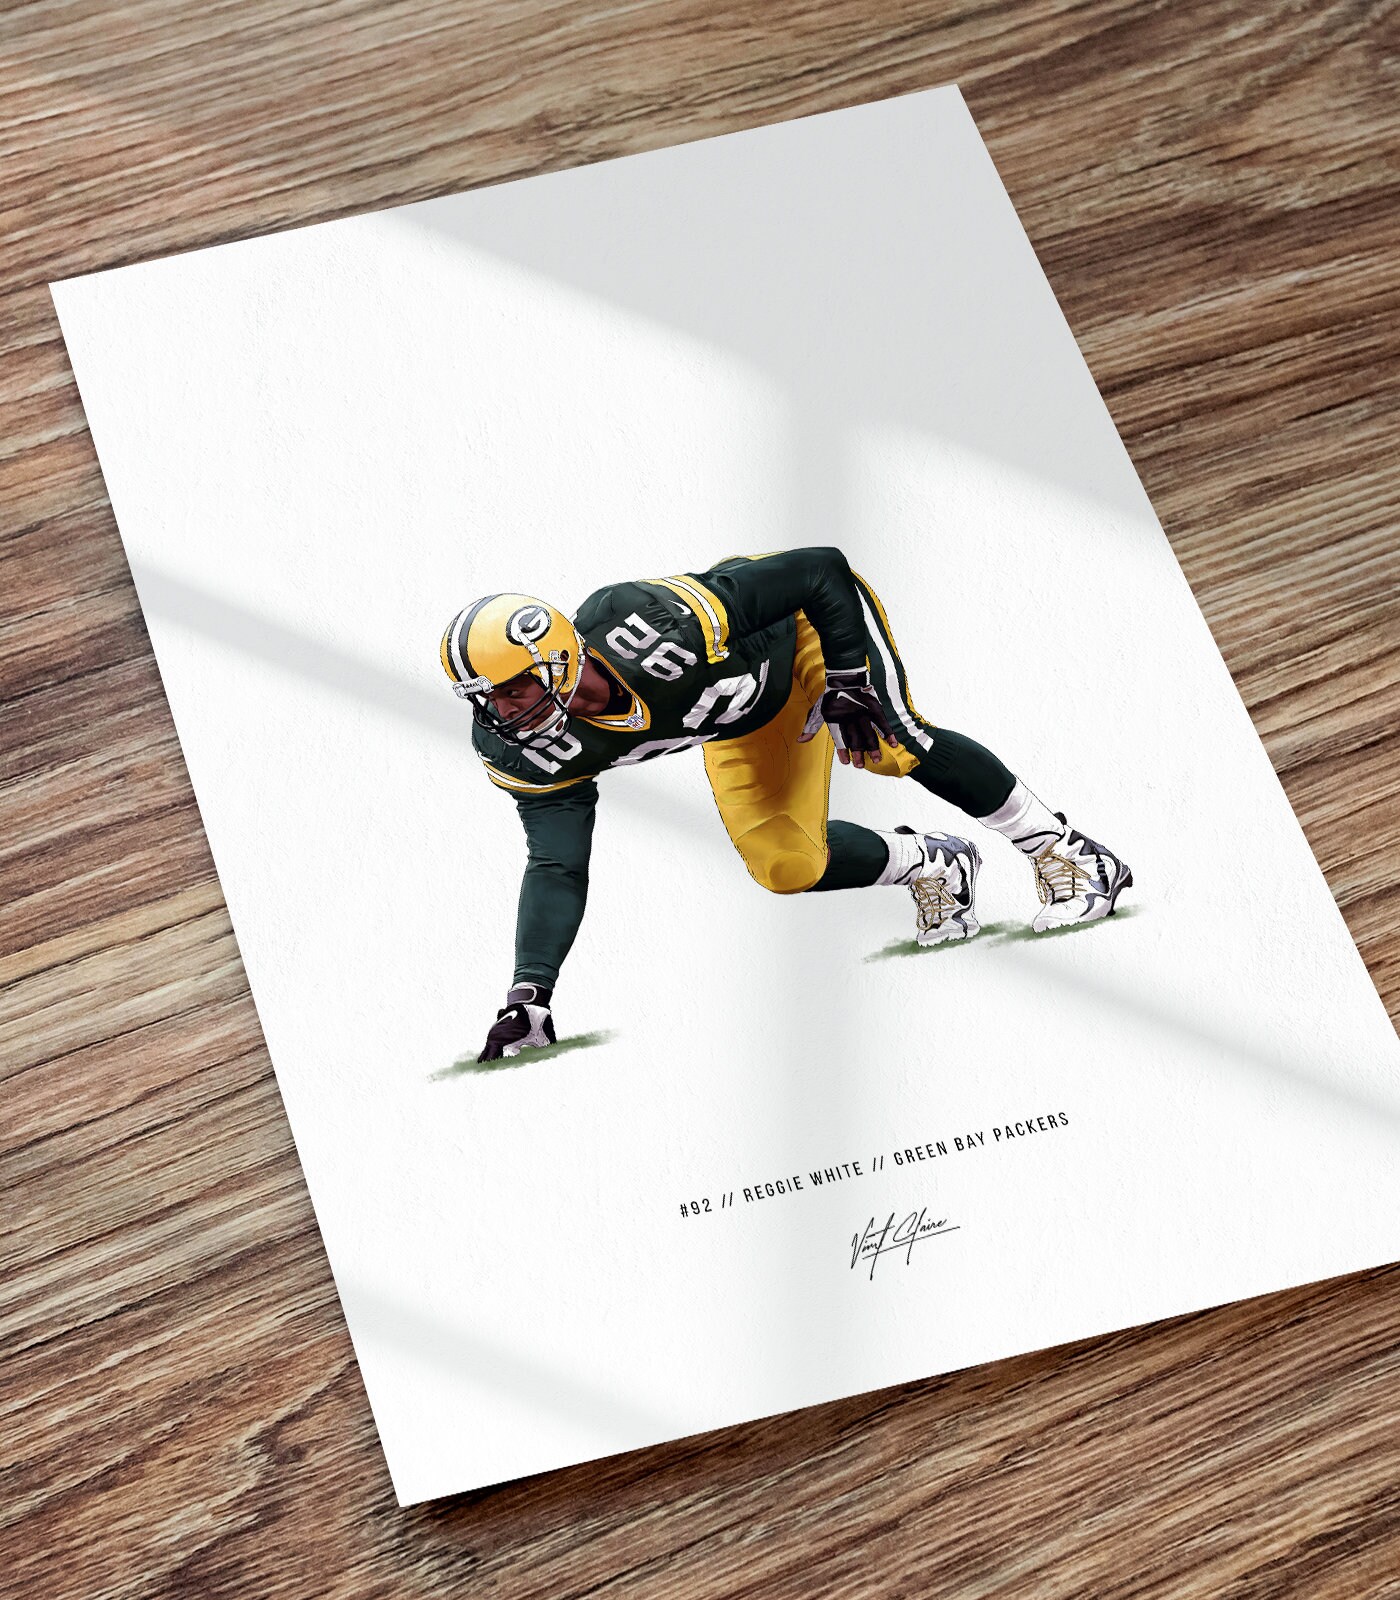 Reggie White Green Bay Packers Football Illustrated Art Print Poster, Reggie White Poster, Gift For Green Bay Packers fans